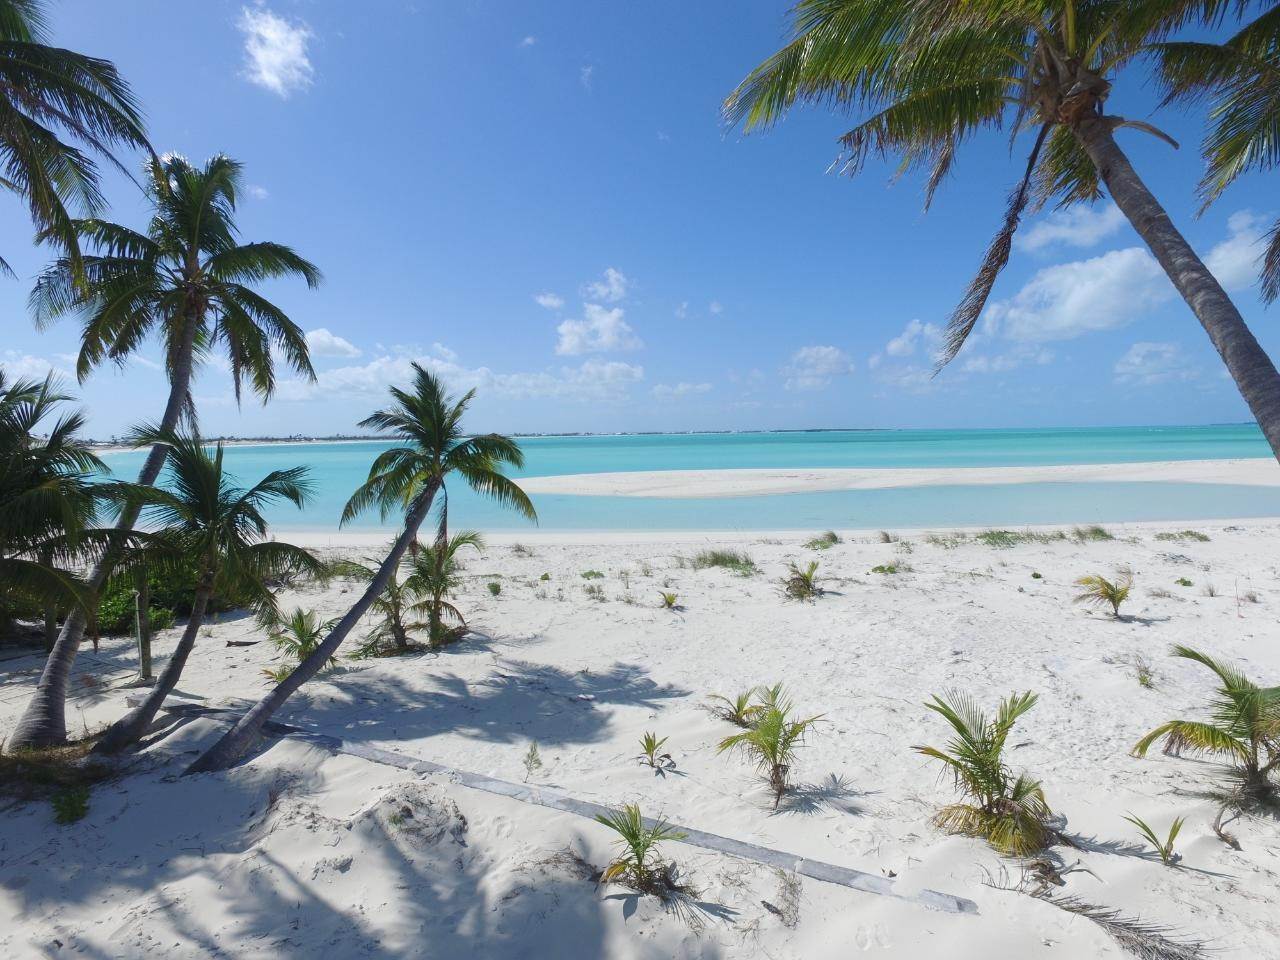 Property for Sale at Beach Combo Lots 2 & 3 Treasure Cay, Abaco Bahamas